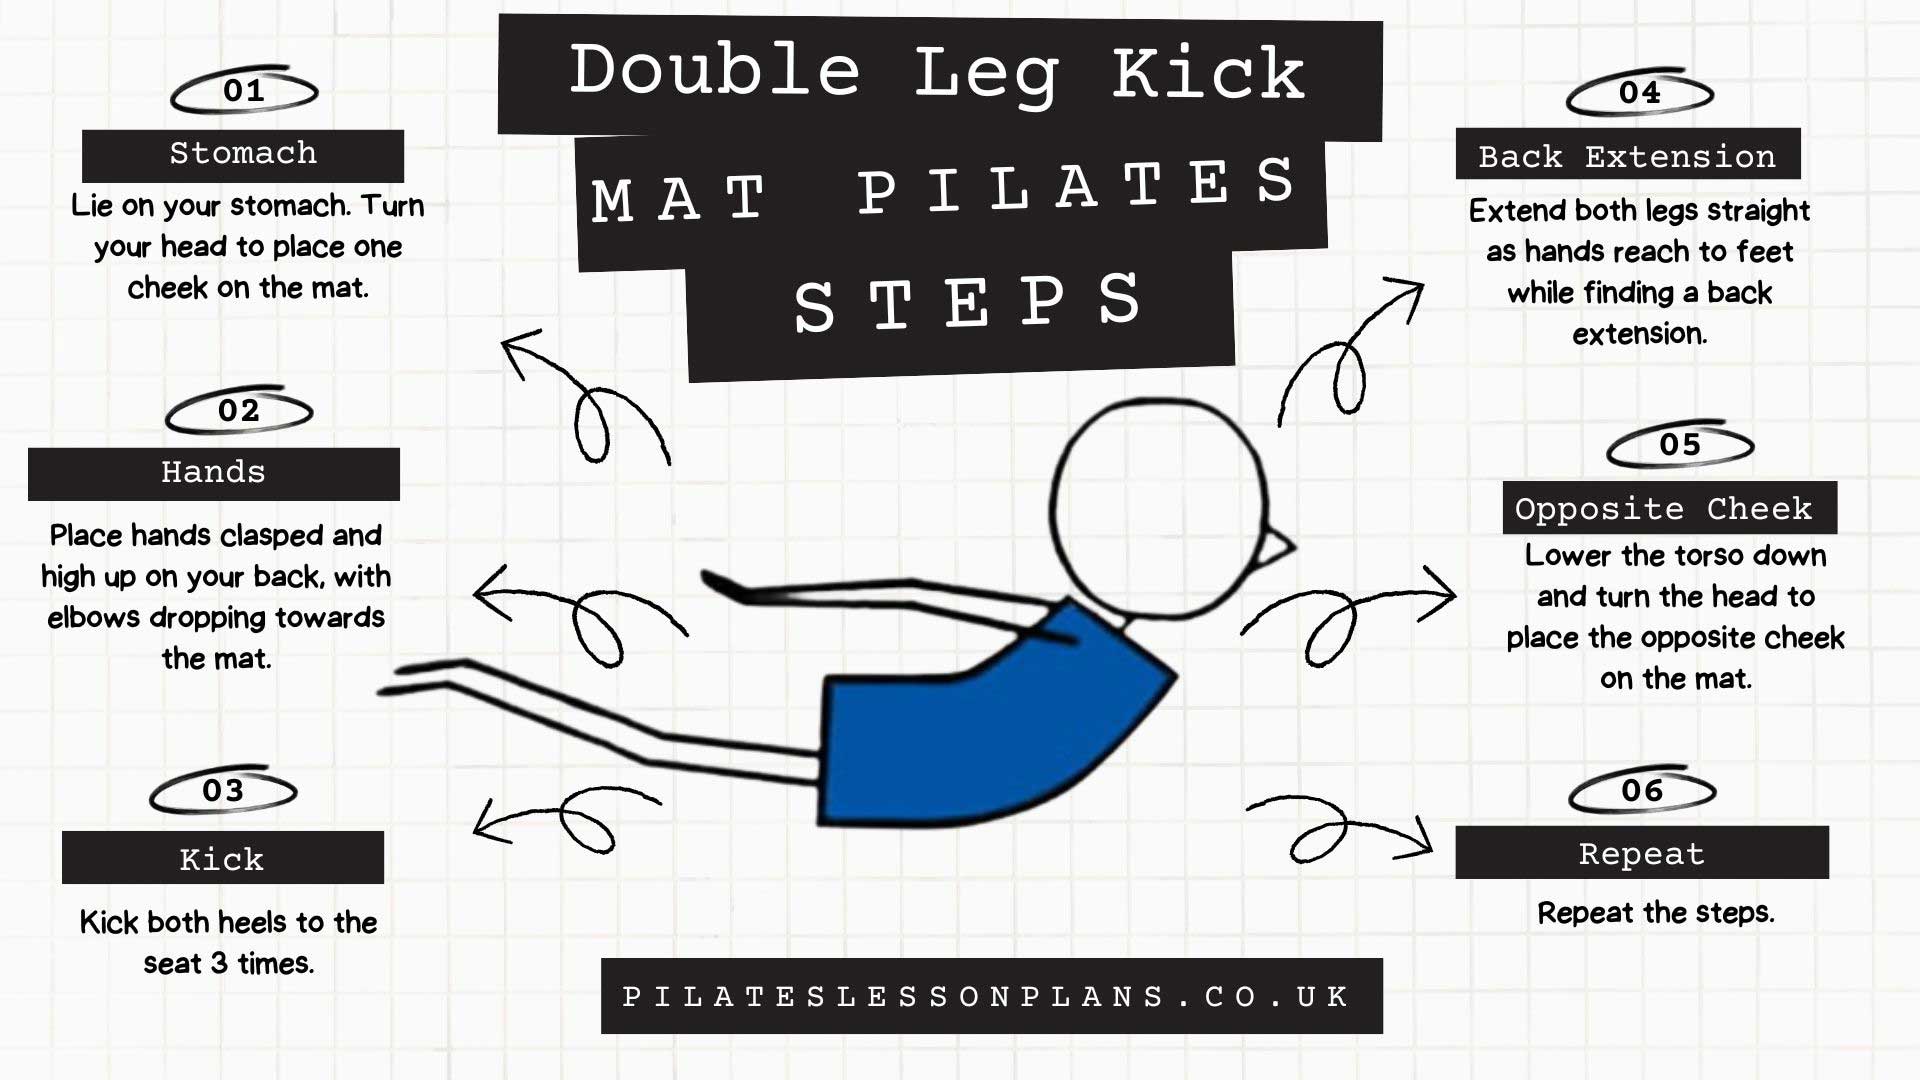 Double Leg Kick Pilates Steps Infographic